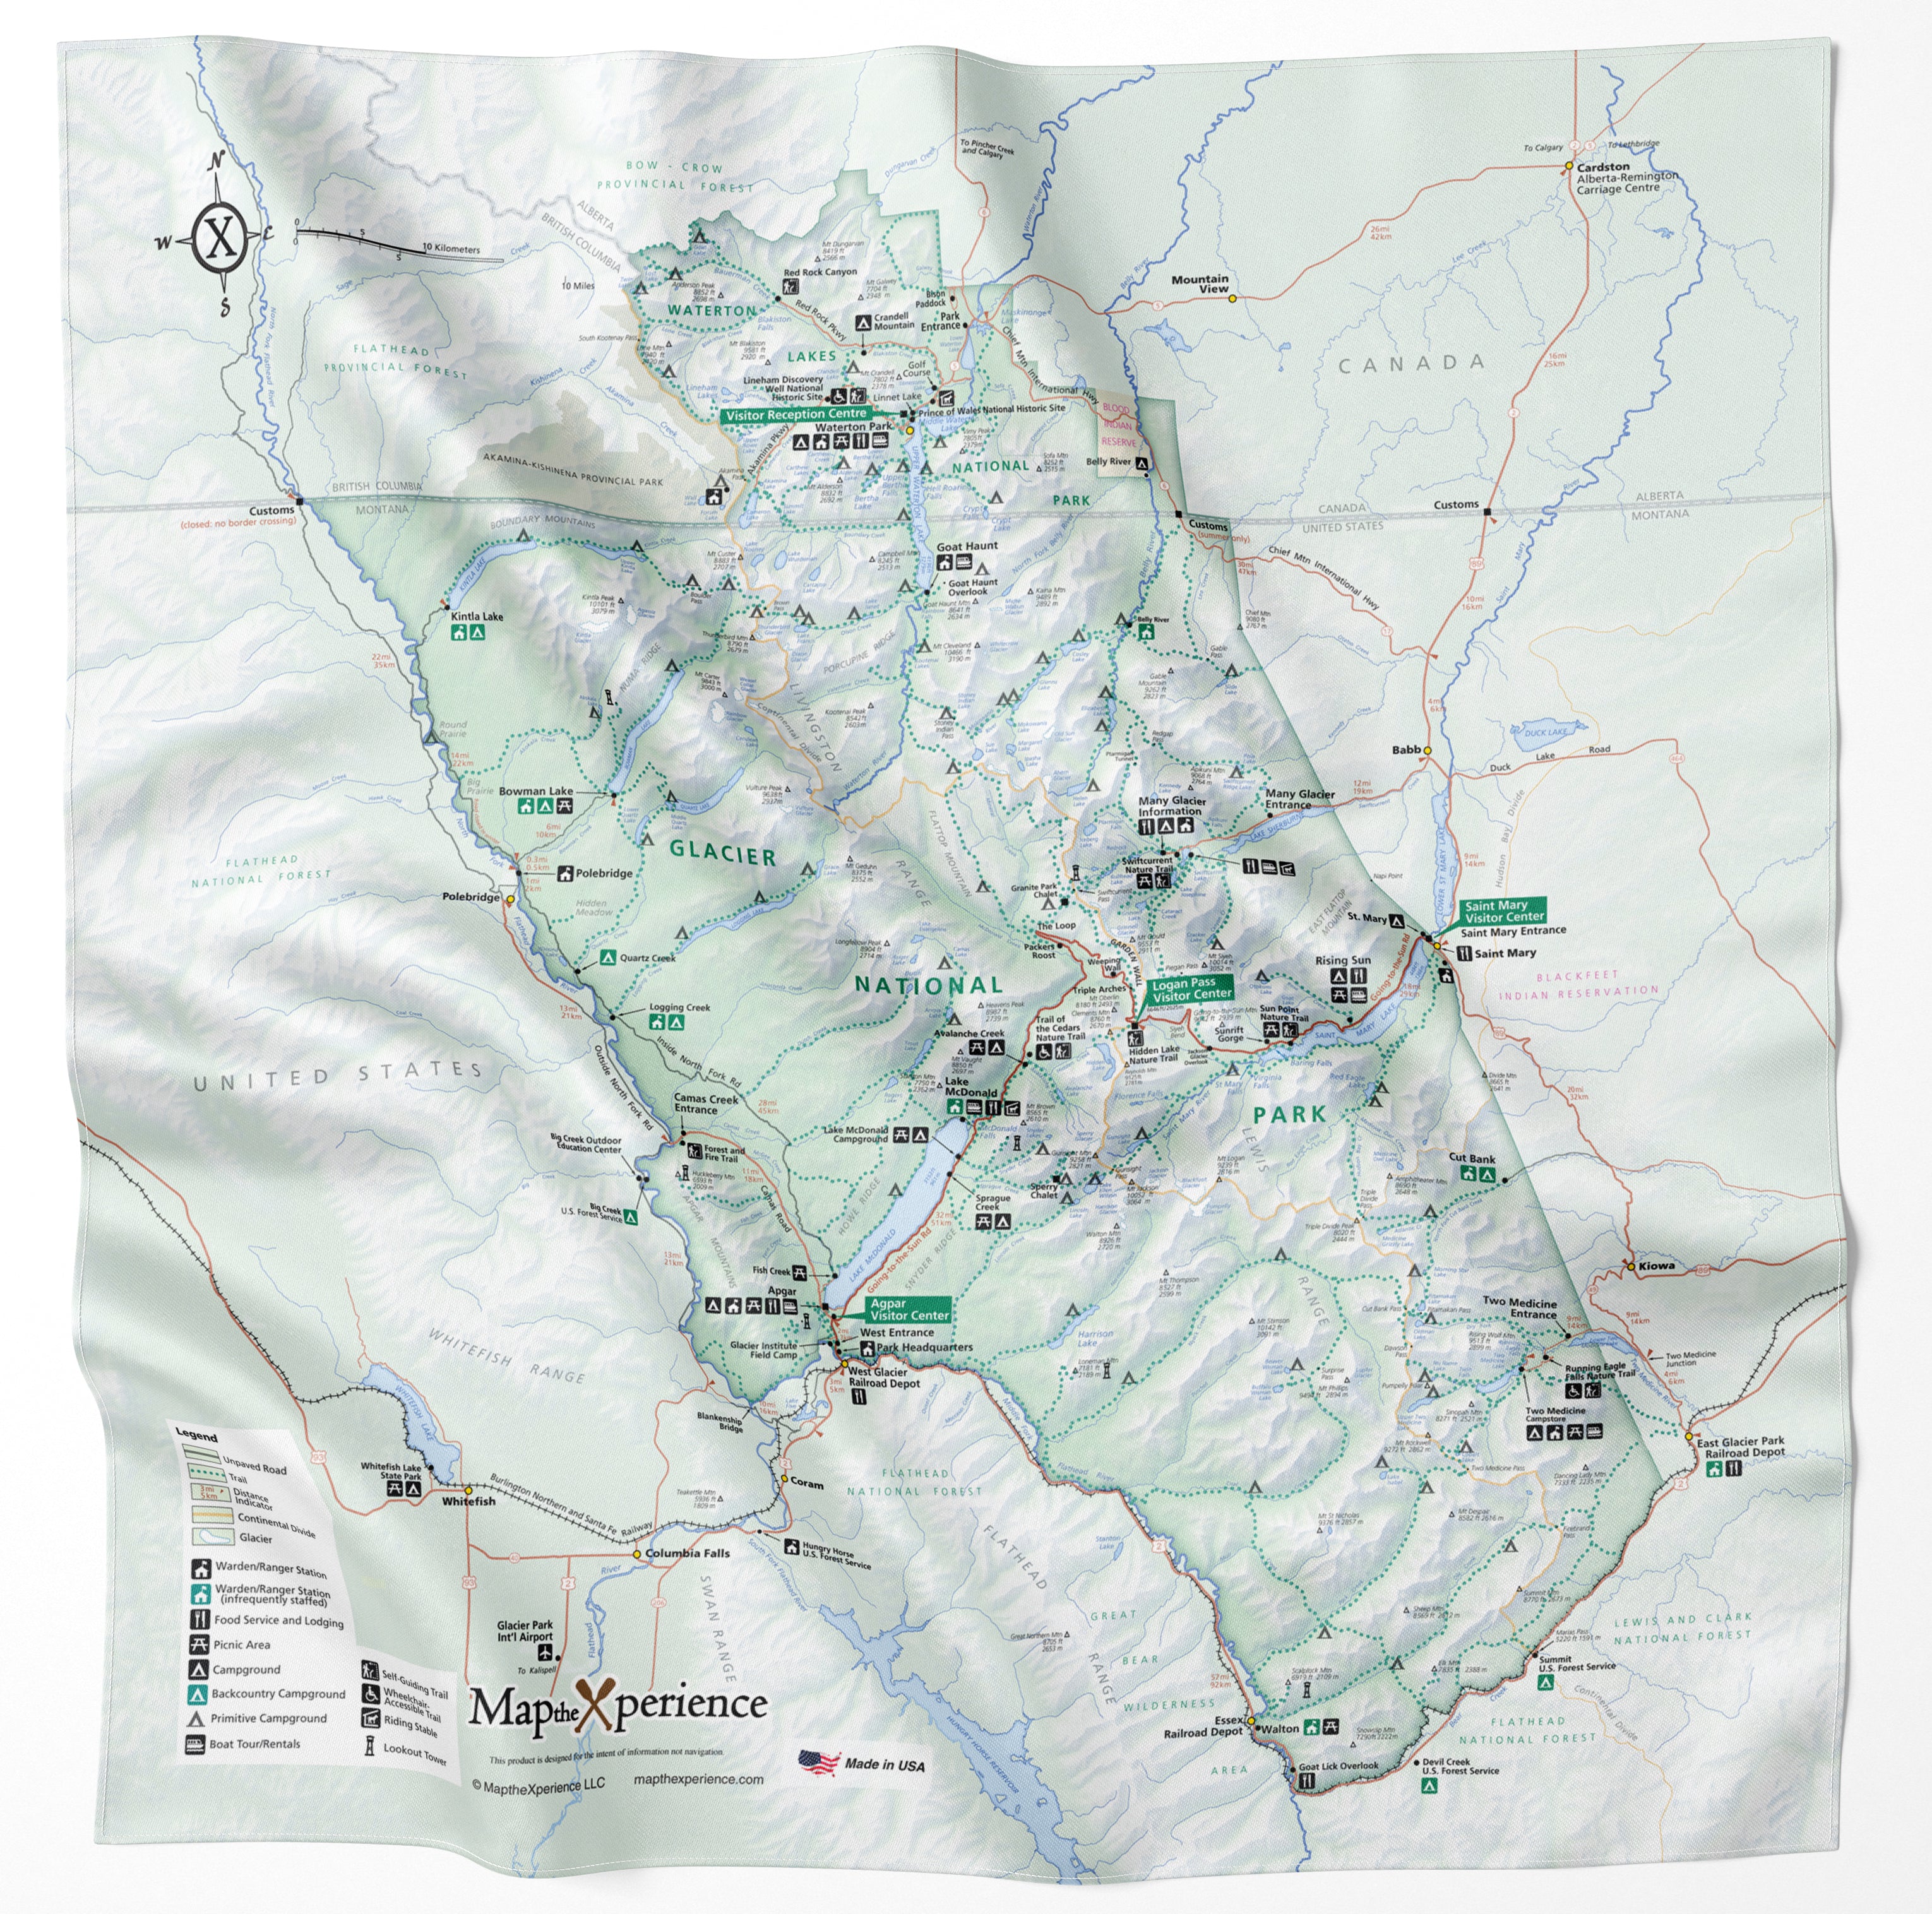 Glacier National Park Handy Map Bandana